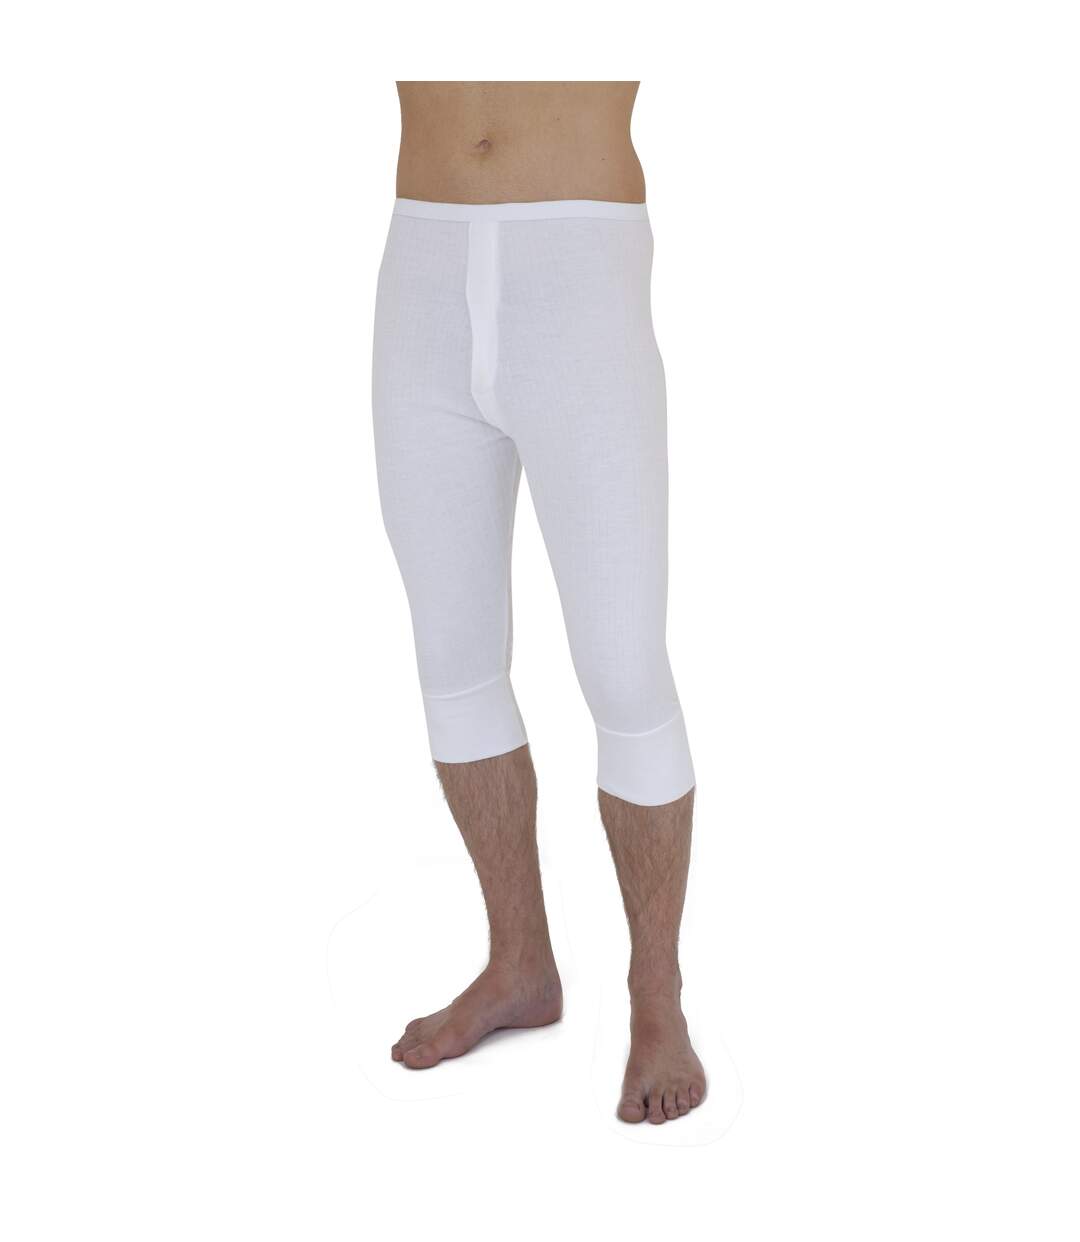 Mens thermal Underwear 3/4 length long Johns (British Made) (White)